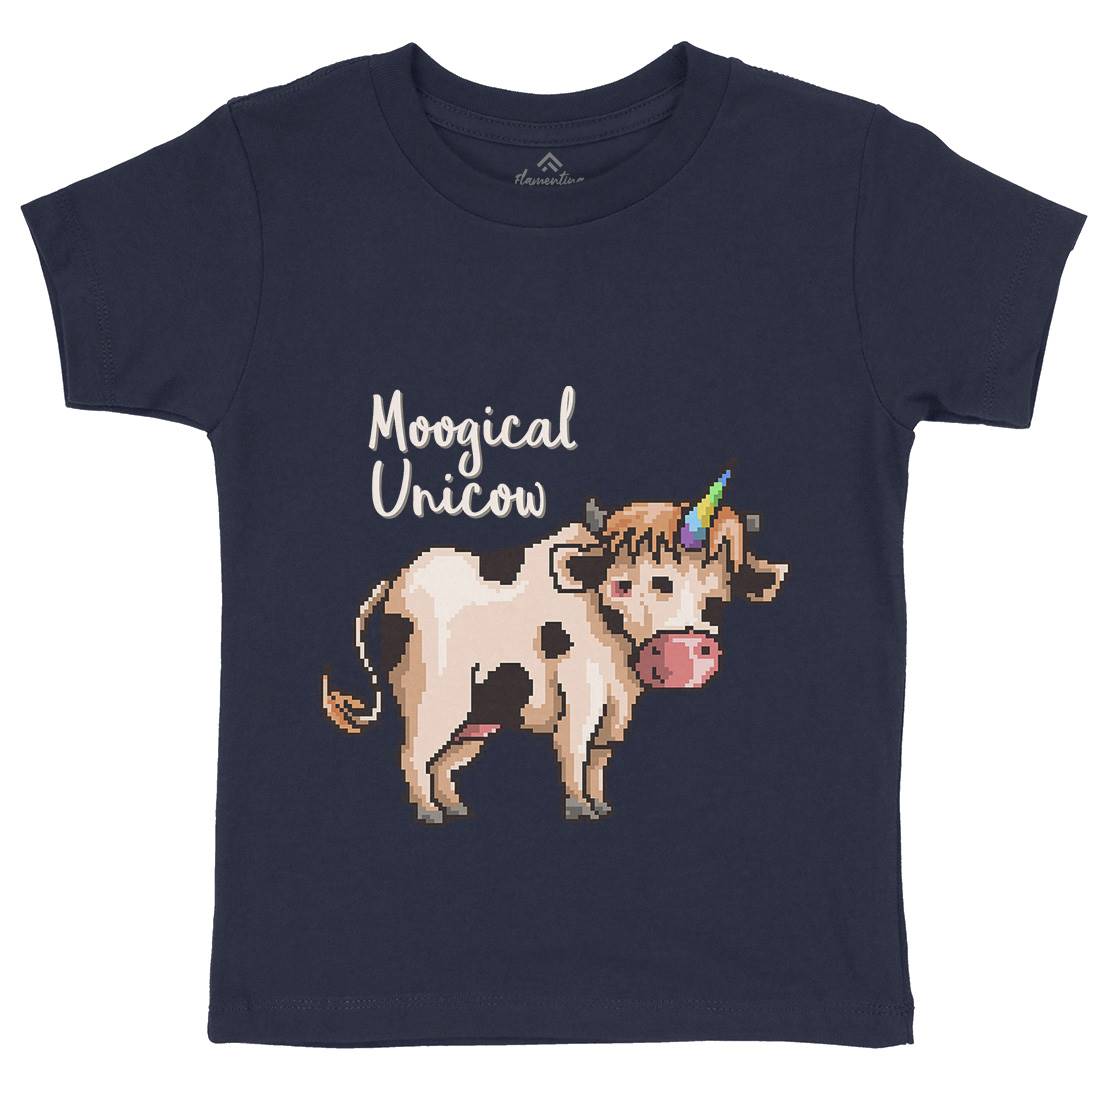 Moogical Unicow Kids Crew Neck T-Shirt Animals B933